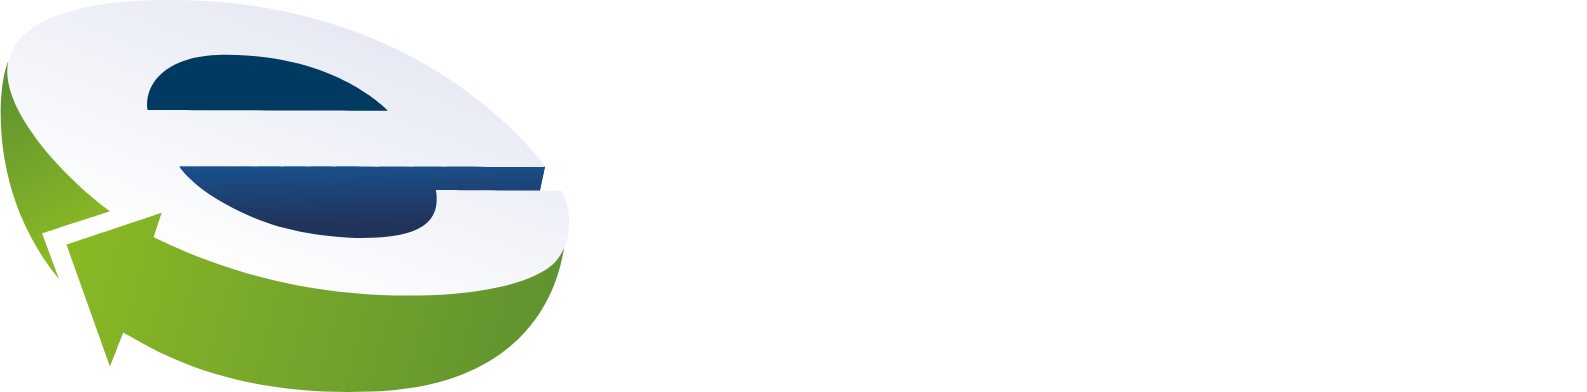 Encore Capital Group logo large for dark backgrounds (transparent PNG)